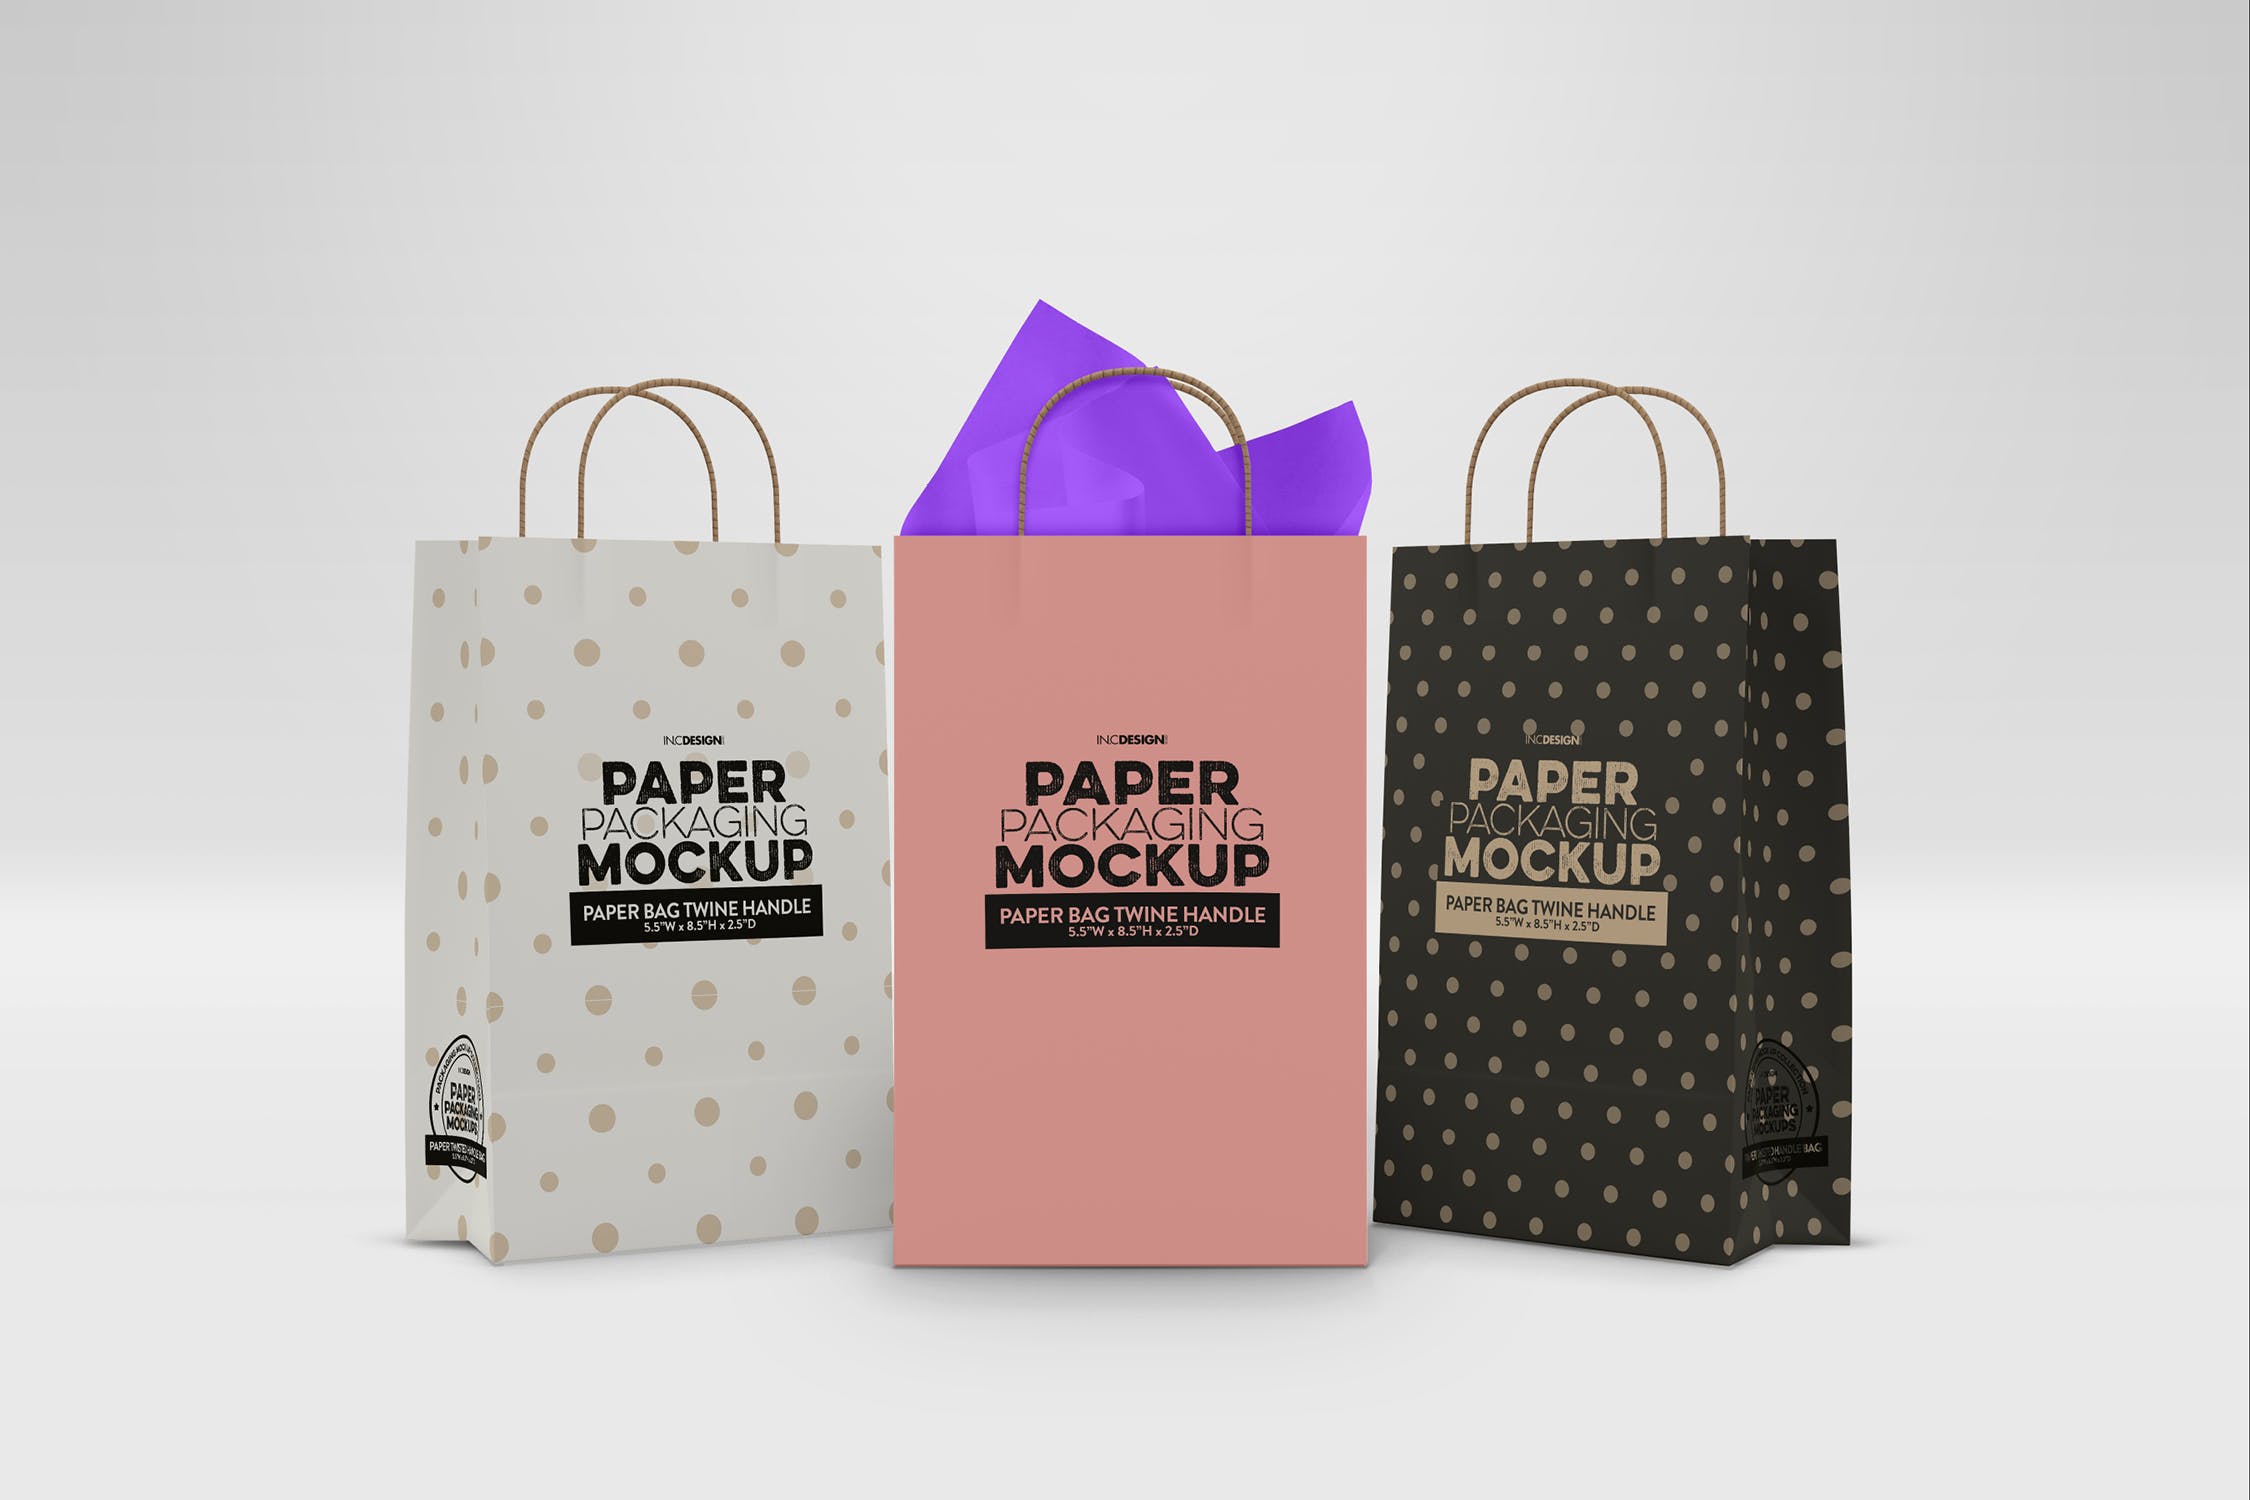 购物纸袋设计图片预览样机模板 Paper Bags Twine Handles Packaging Mockup插图(3)